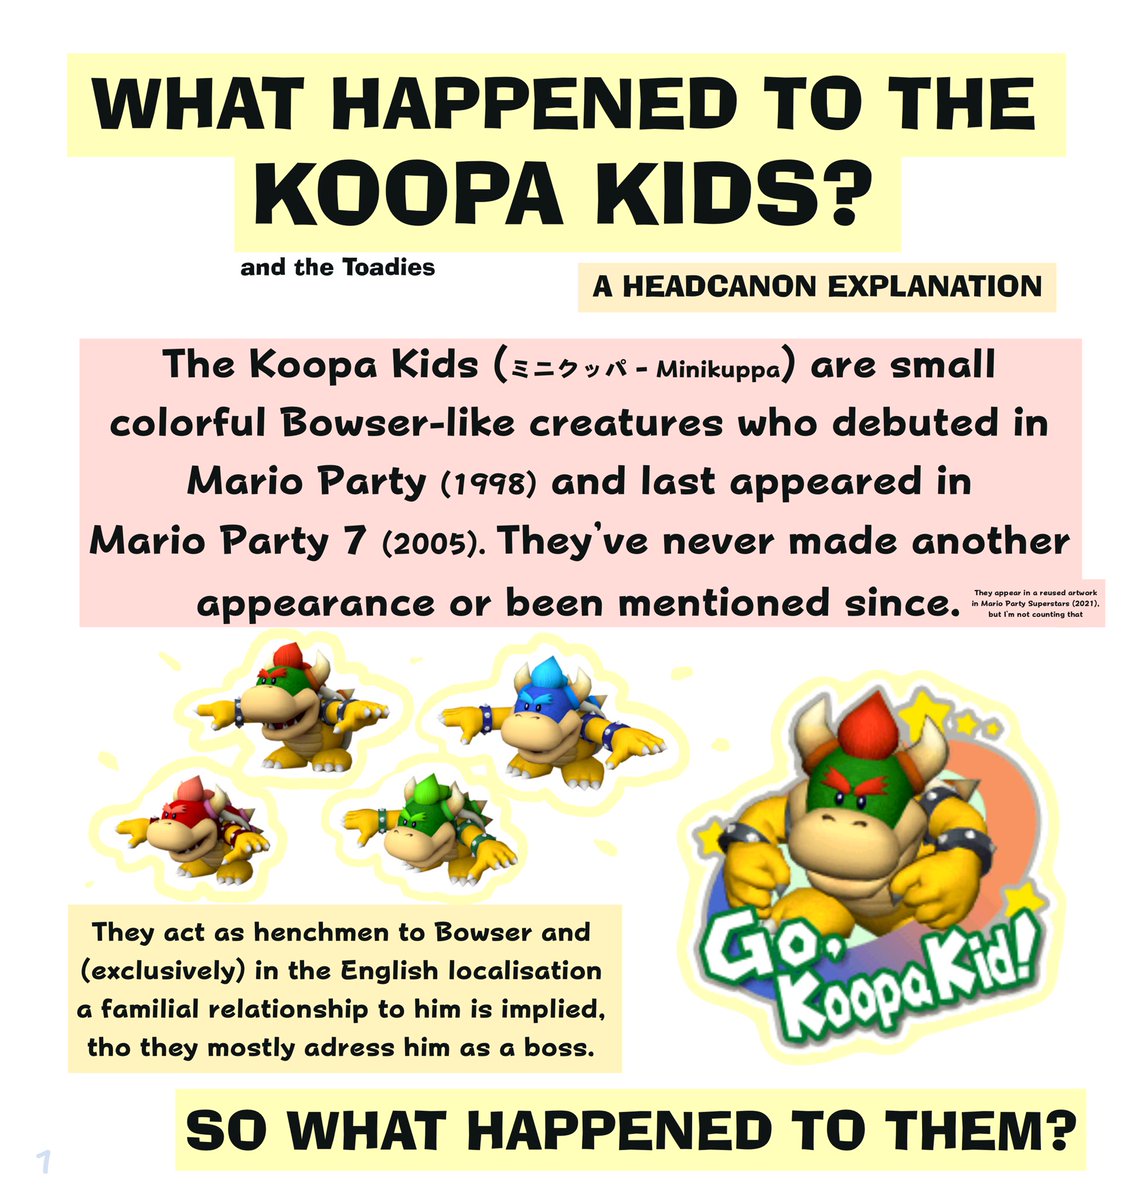 Koopa Kid and Toady lore? (1/2) 